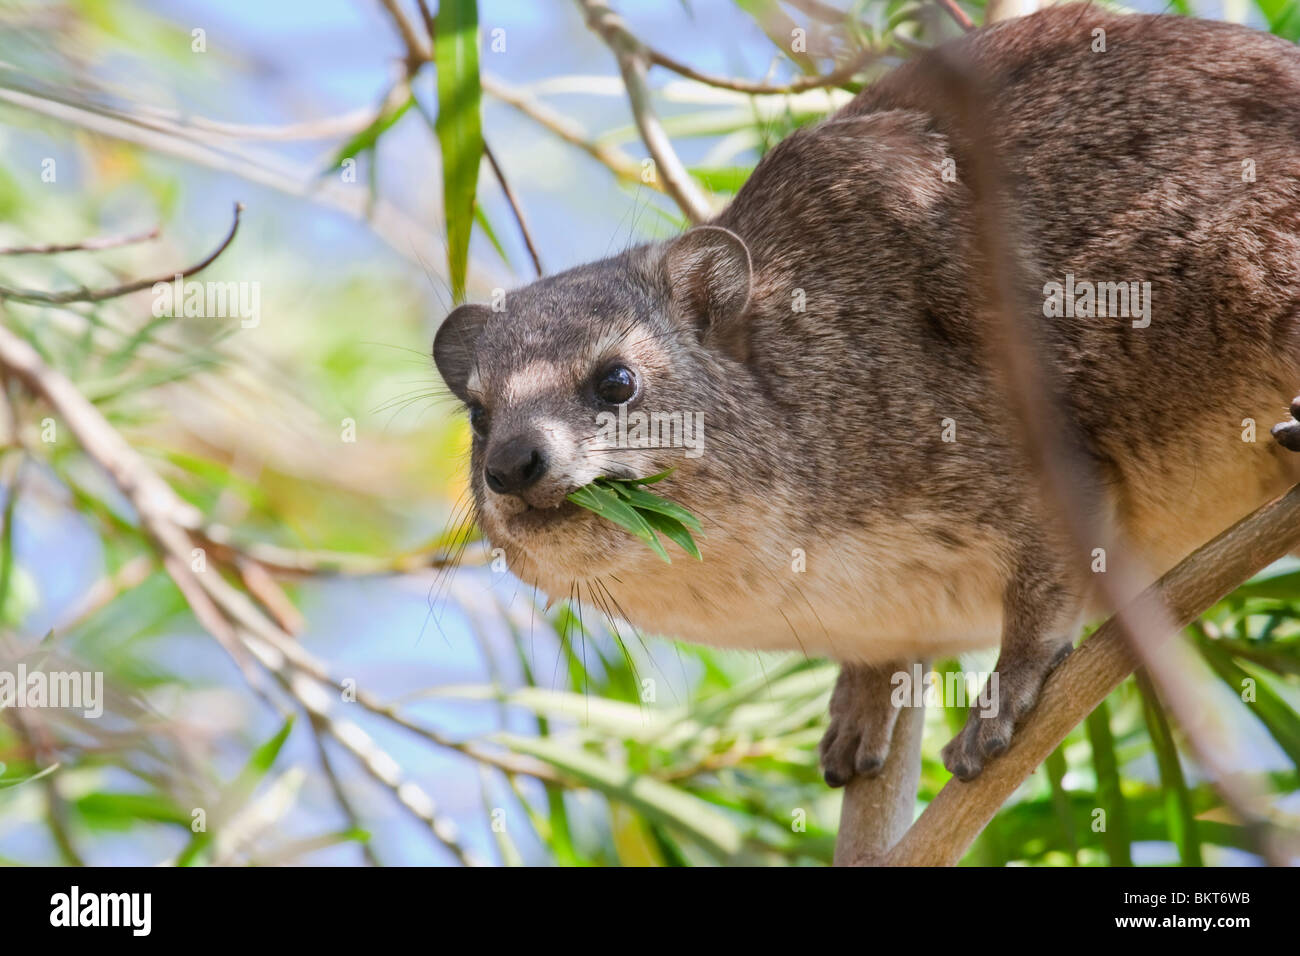 The eastern tree hyrax (Dendrohyrax arboreus), Tsavo East national Park, Kenya. Stock Photo